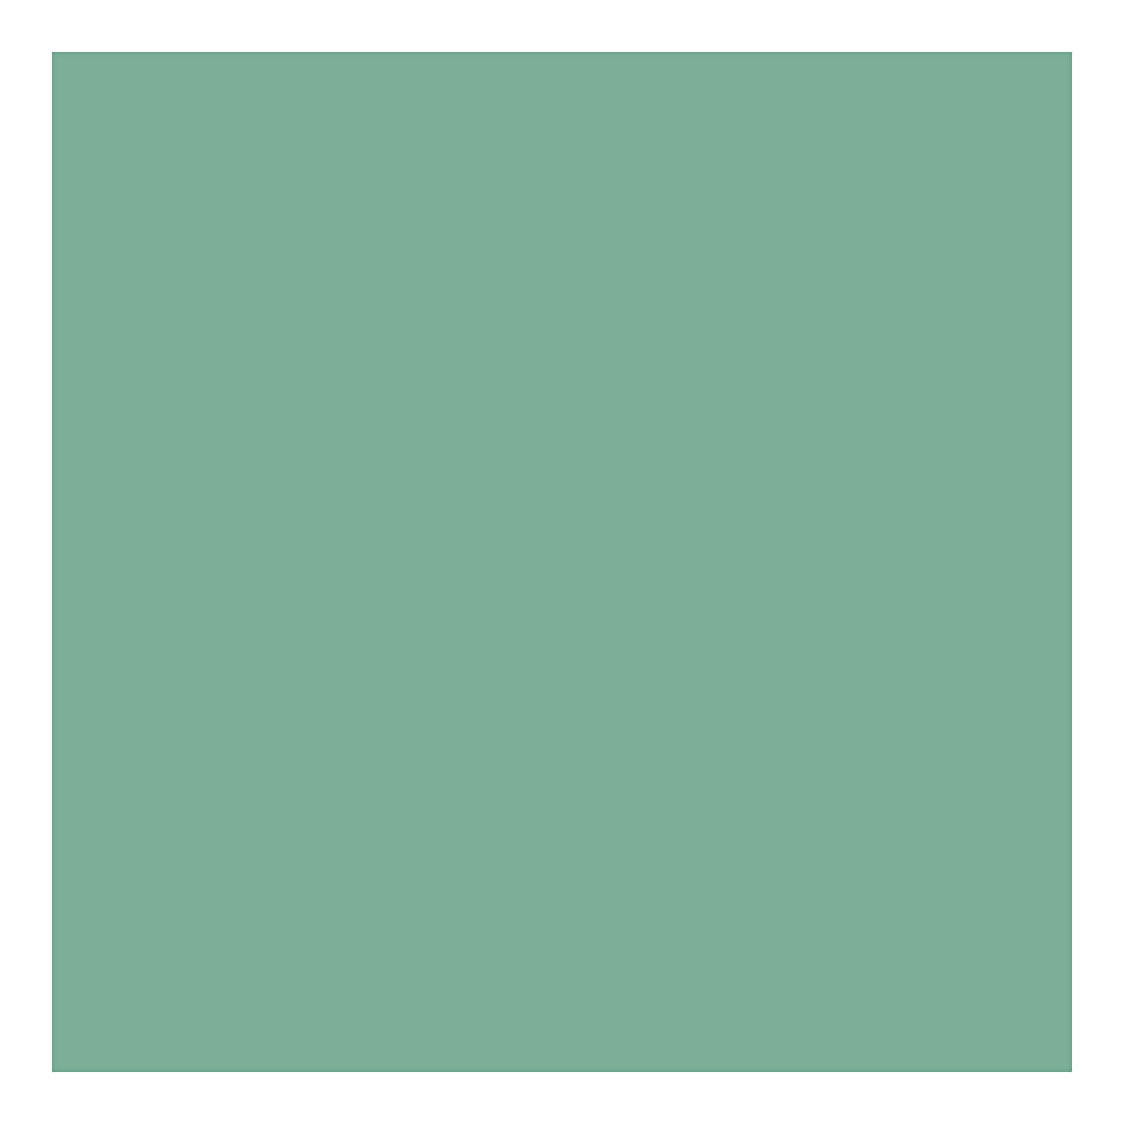 Textilfarbe Halbdeckende Textilfarbe – Seegrün, 50 ml